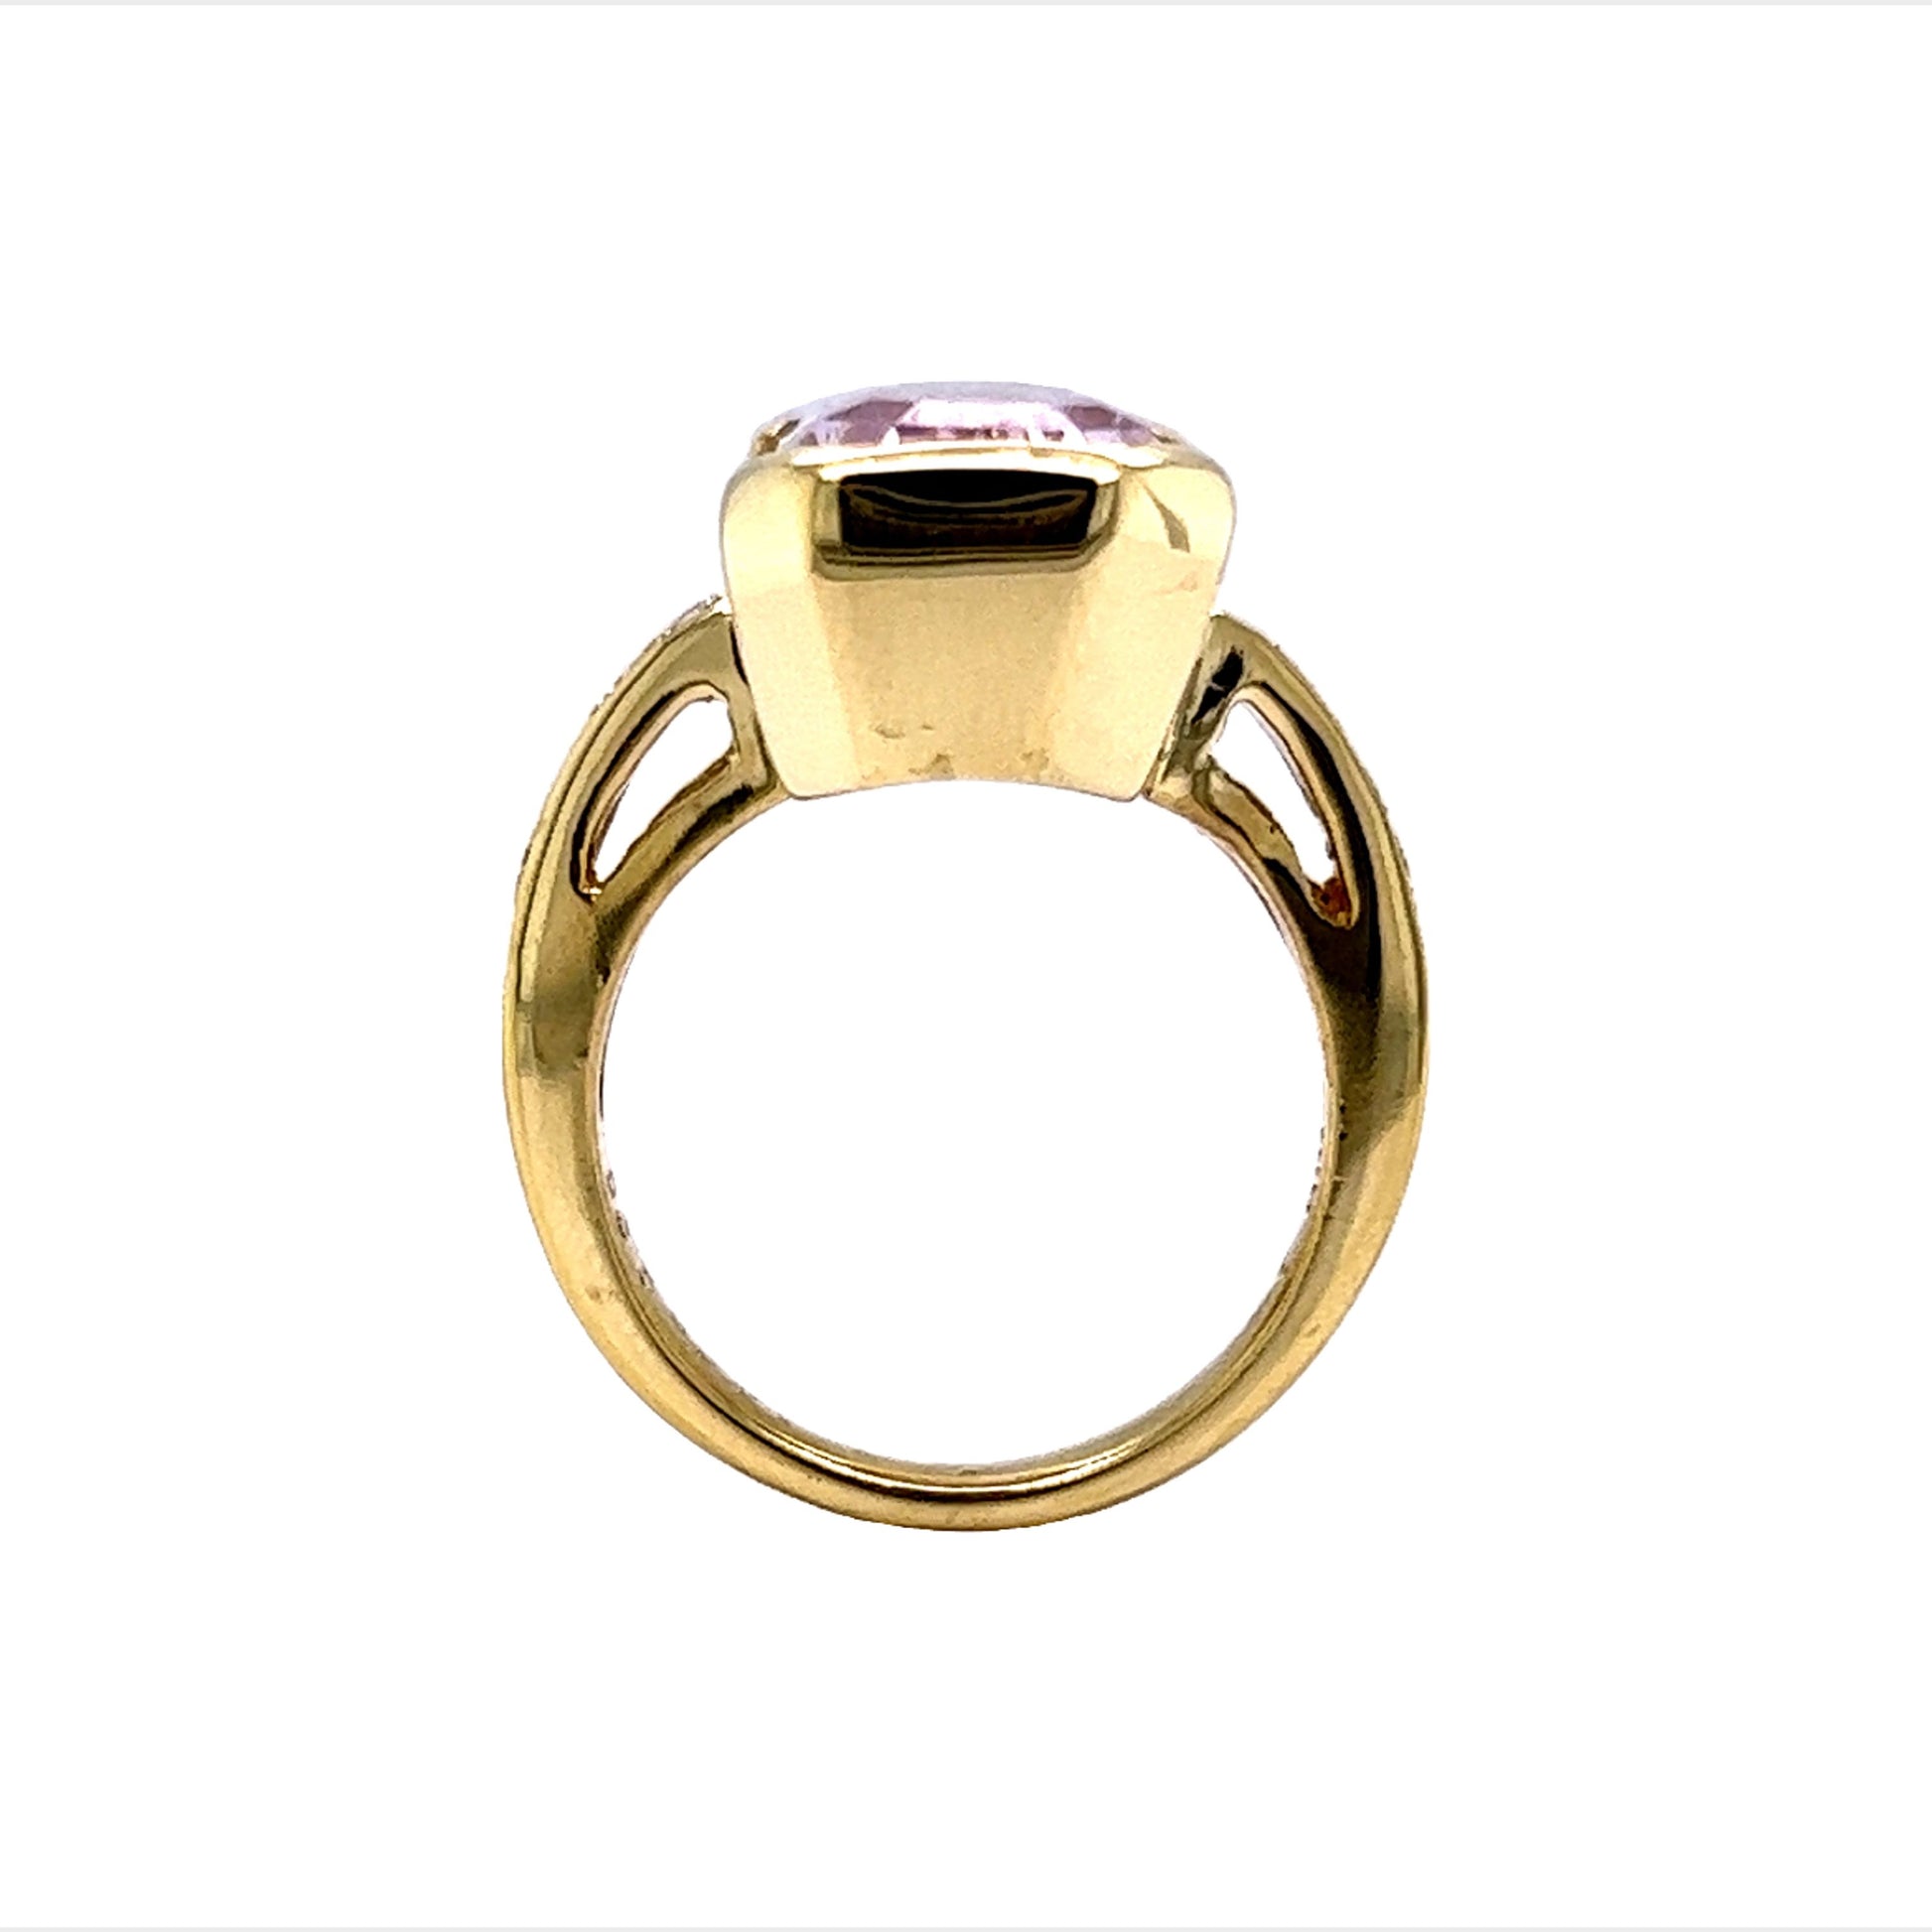 Elongated Kunzite & Diamond Cocktail Ring in 18k Yellow Gold